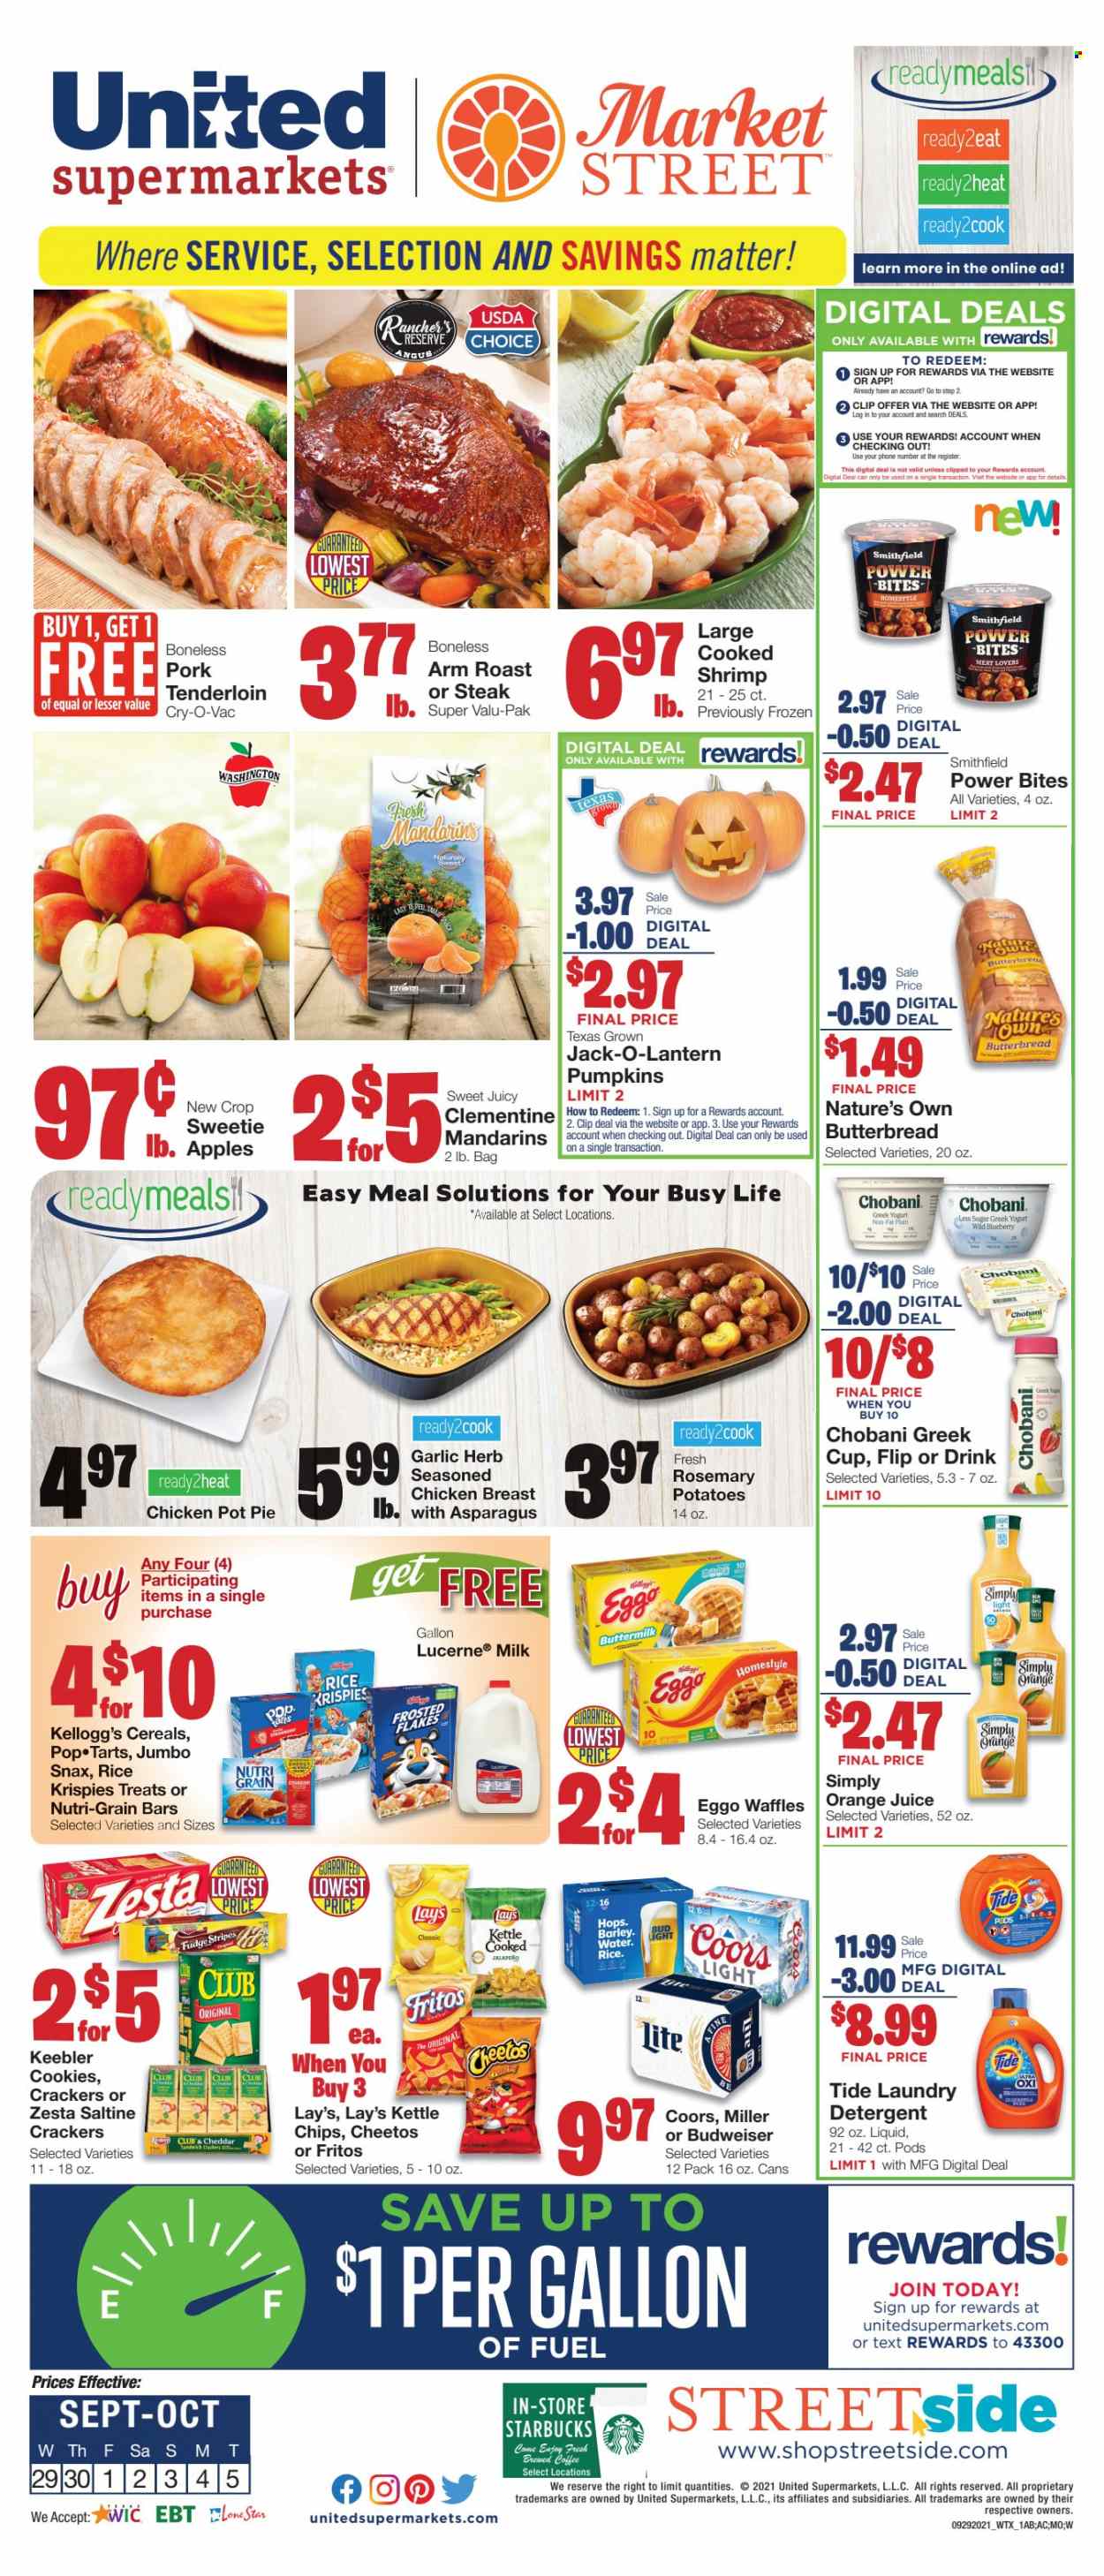 thumbnail - United Supermarkets Flyer - 09/29/2021 - 10/05/2021 - Sales products - pie, pot pie, waffles, asparagus, pumpkin, apples, mandarines, chicken breasts, steak, shrimps, sandwich, cheese, greek yoghurt, yoghurt, Chobani, buttermilk, eggs, cookies, fudge, crackers, Kellogg's, Nutri-Grain bars, Keebler, Fritos, Cheetos, Lay’s, saltines, cereals, Rice Krispies, Frosted Flakes, Nutri-Grain, rosemary, herbs, orange juice, juice, coffee, Starbucks, beer, Bud Light, Miller, detergent, Tide, laundry detergent, pot, cup, Nature's Own, Budweiser, Coors. Page 1.